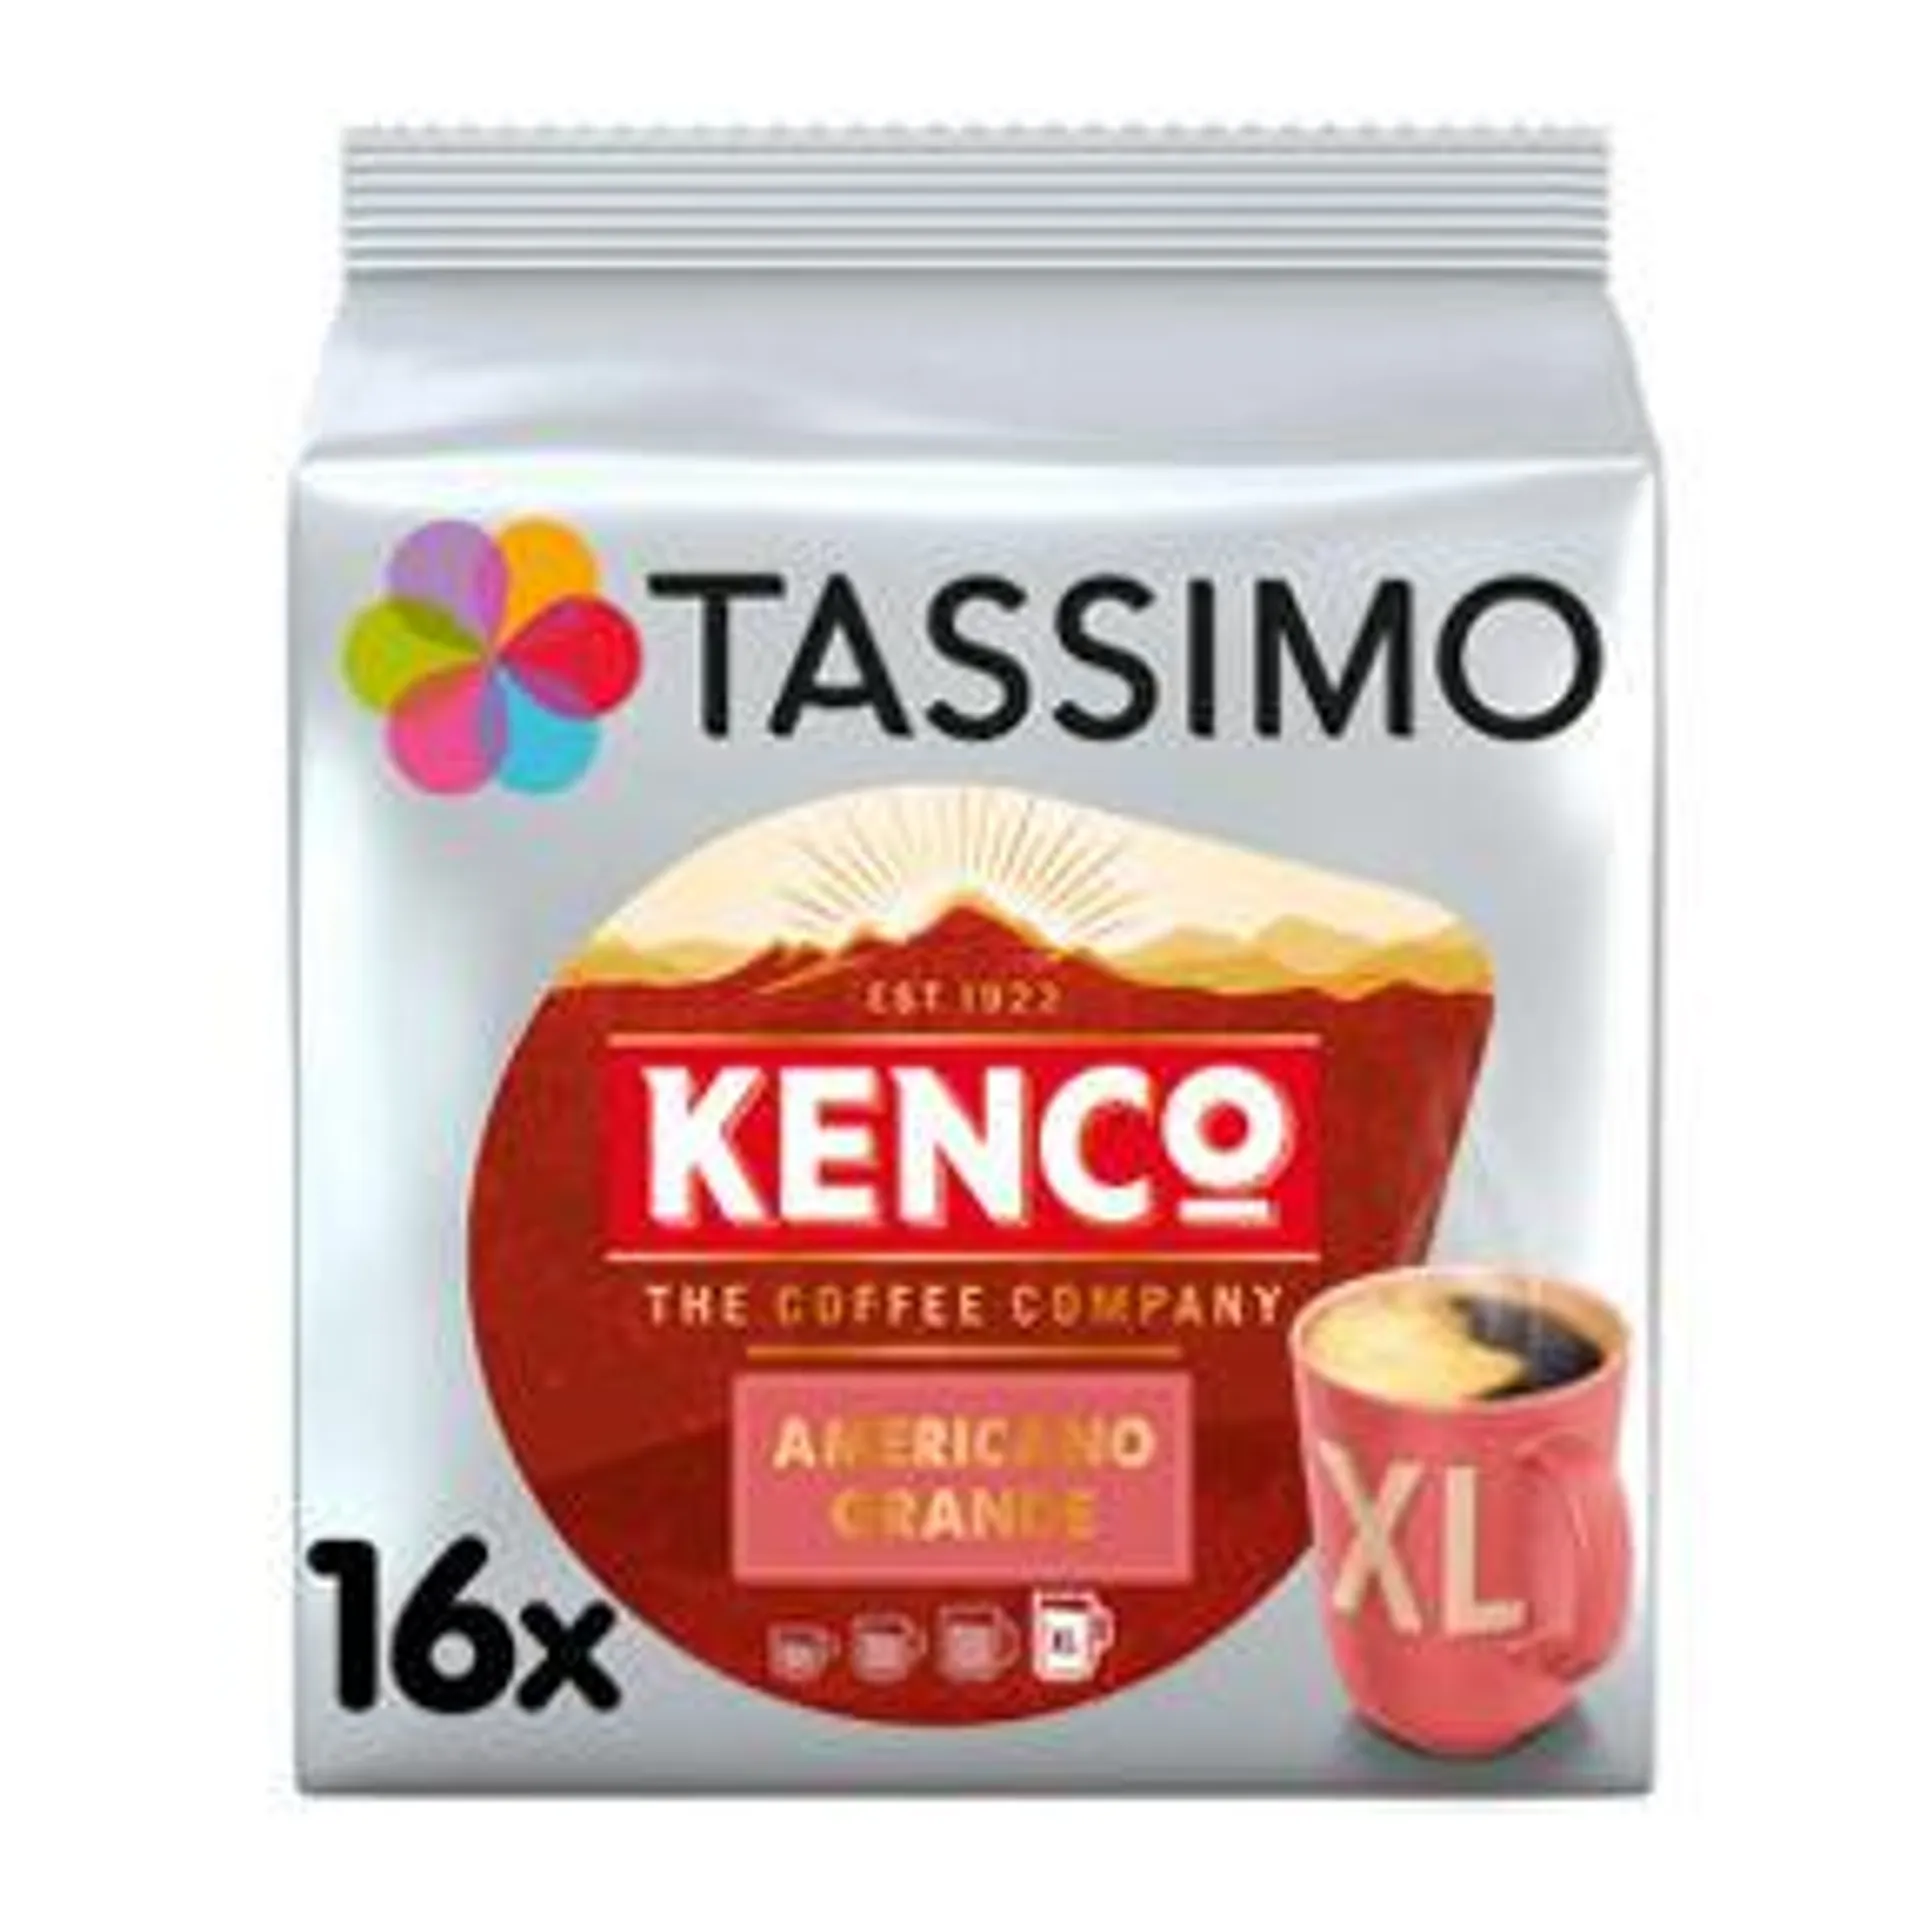 Tassimo Kenco Americano Grande Coffee Pods x 16